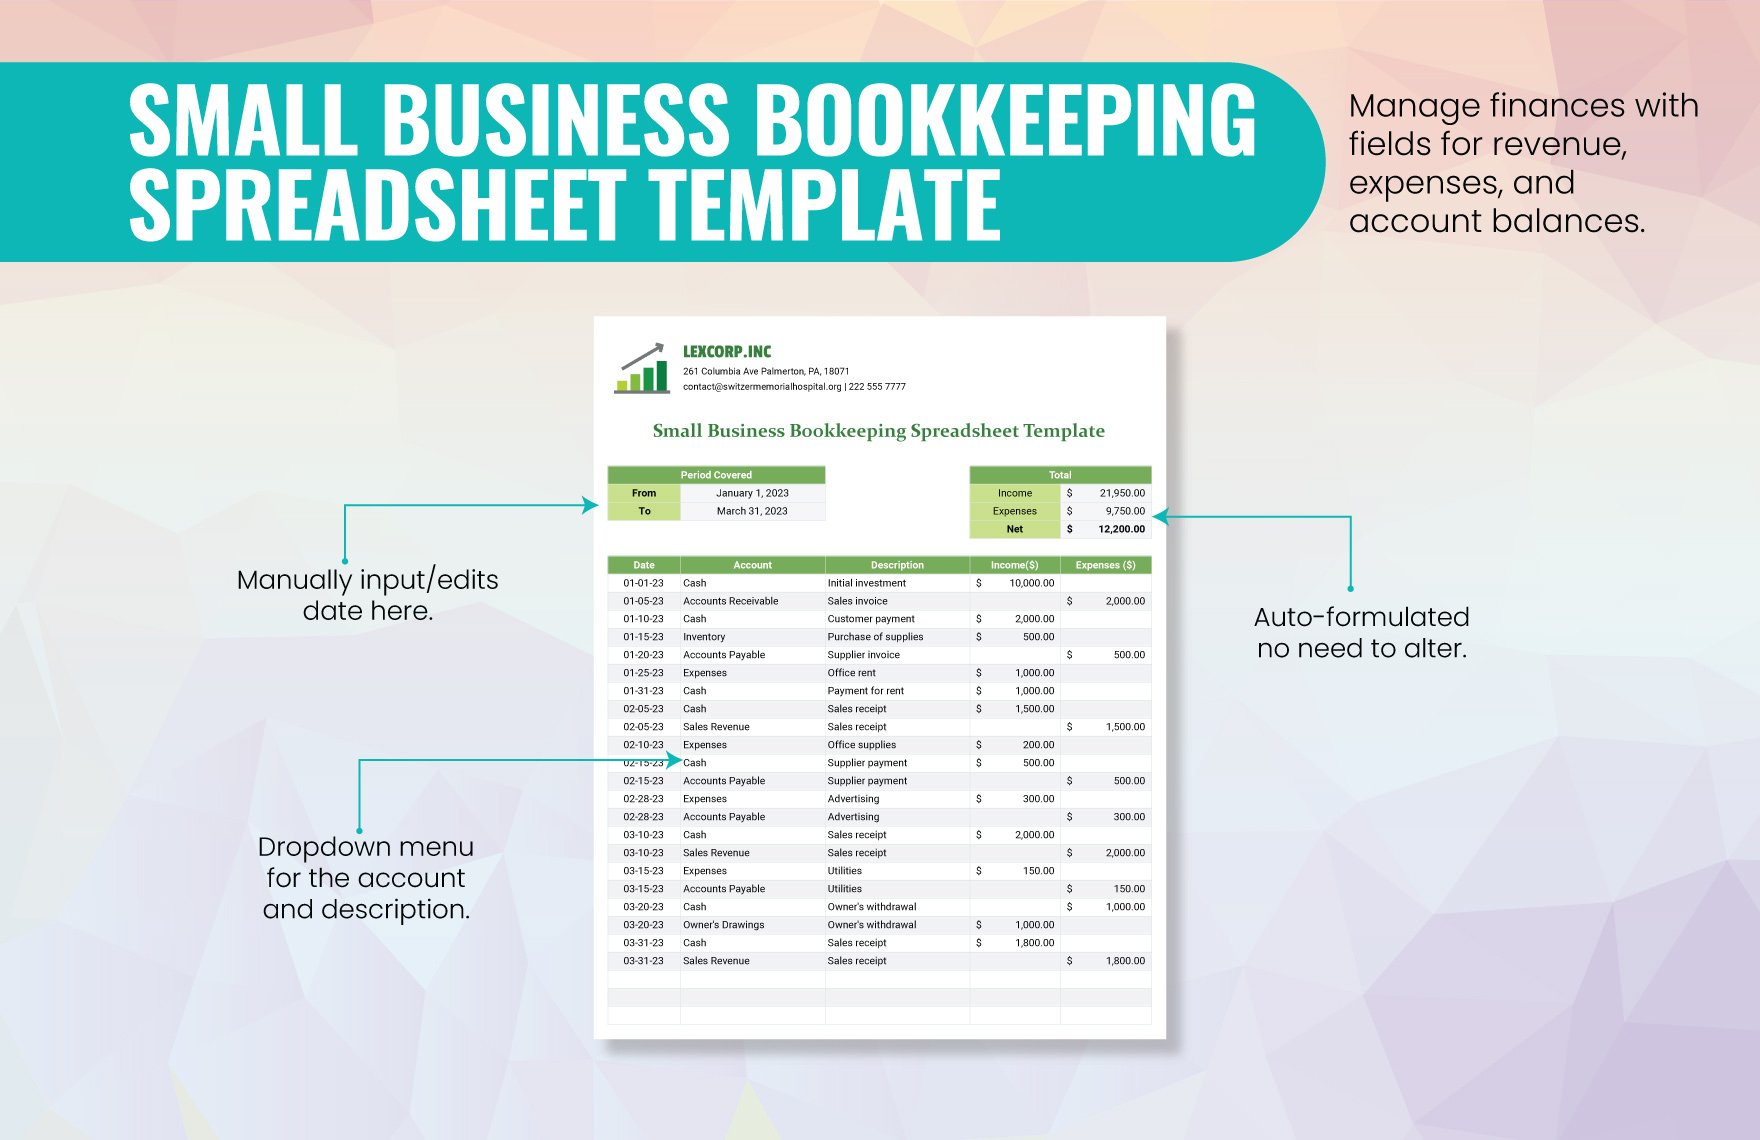 xSmall Business Bookkeeping Spreadsheet Template